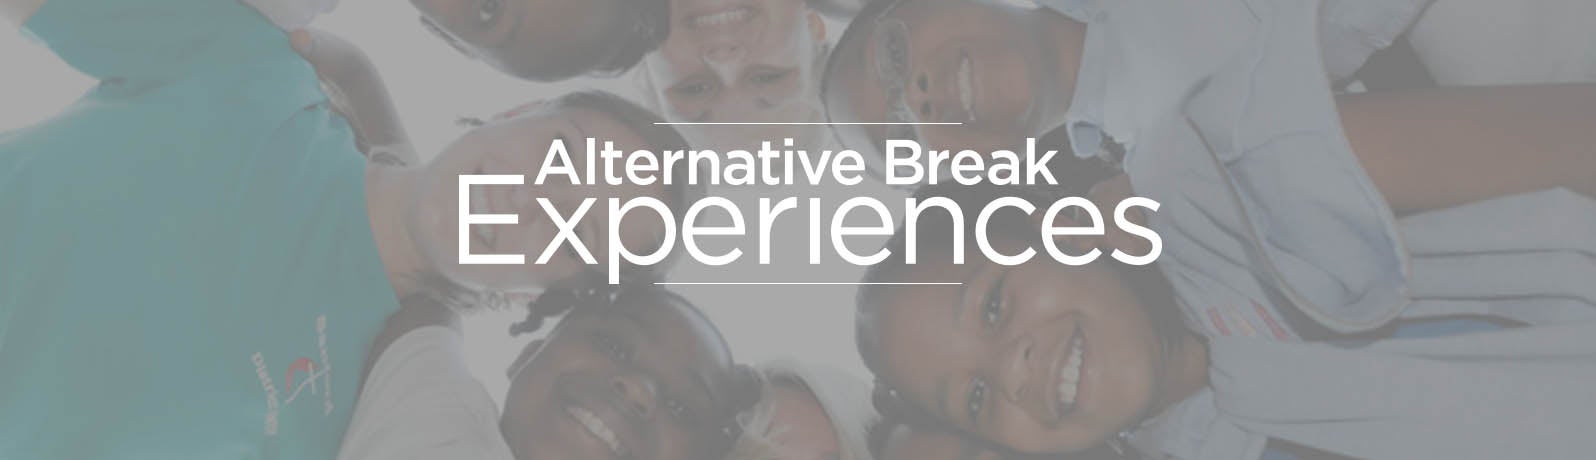 Alternative Break Experiences